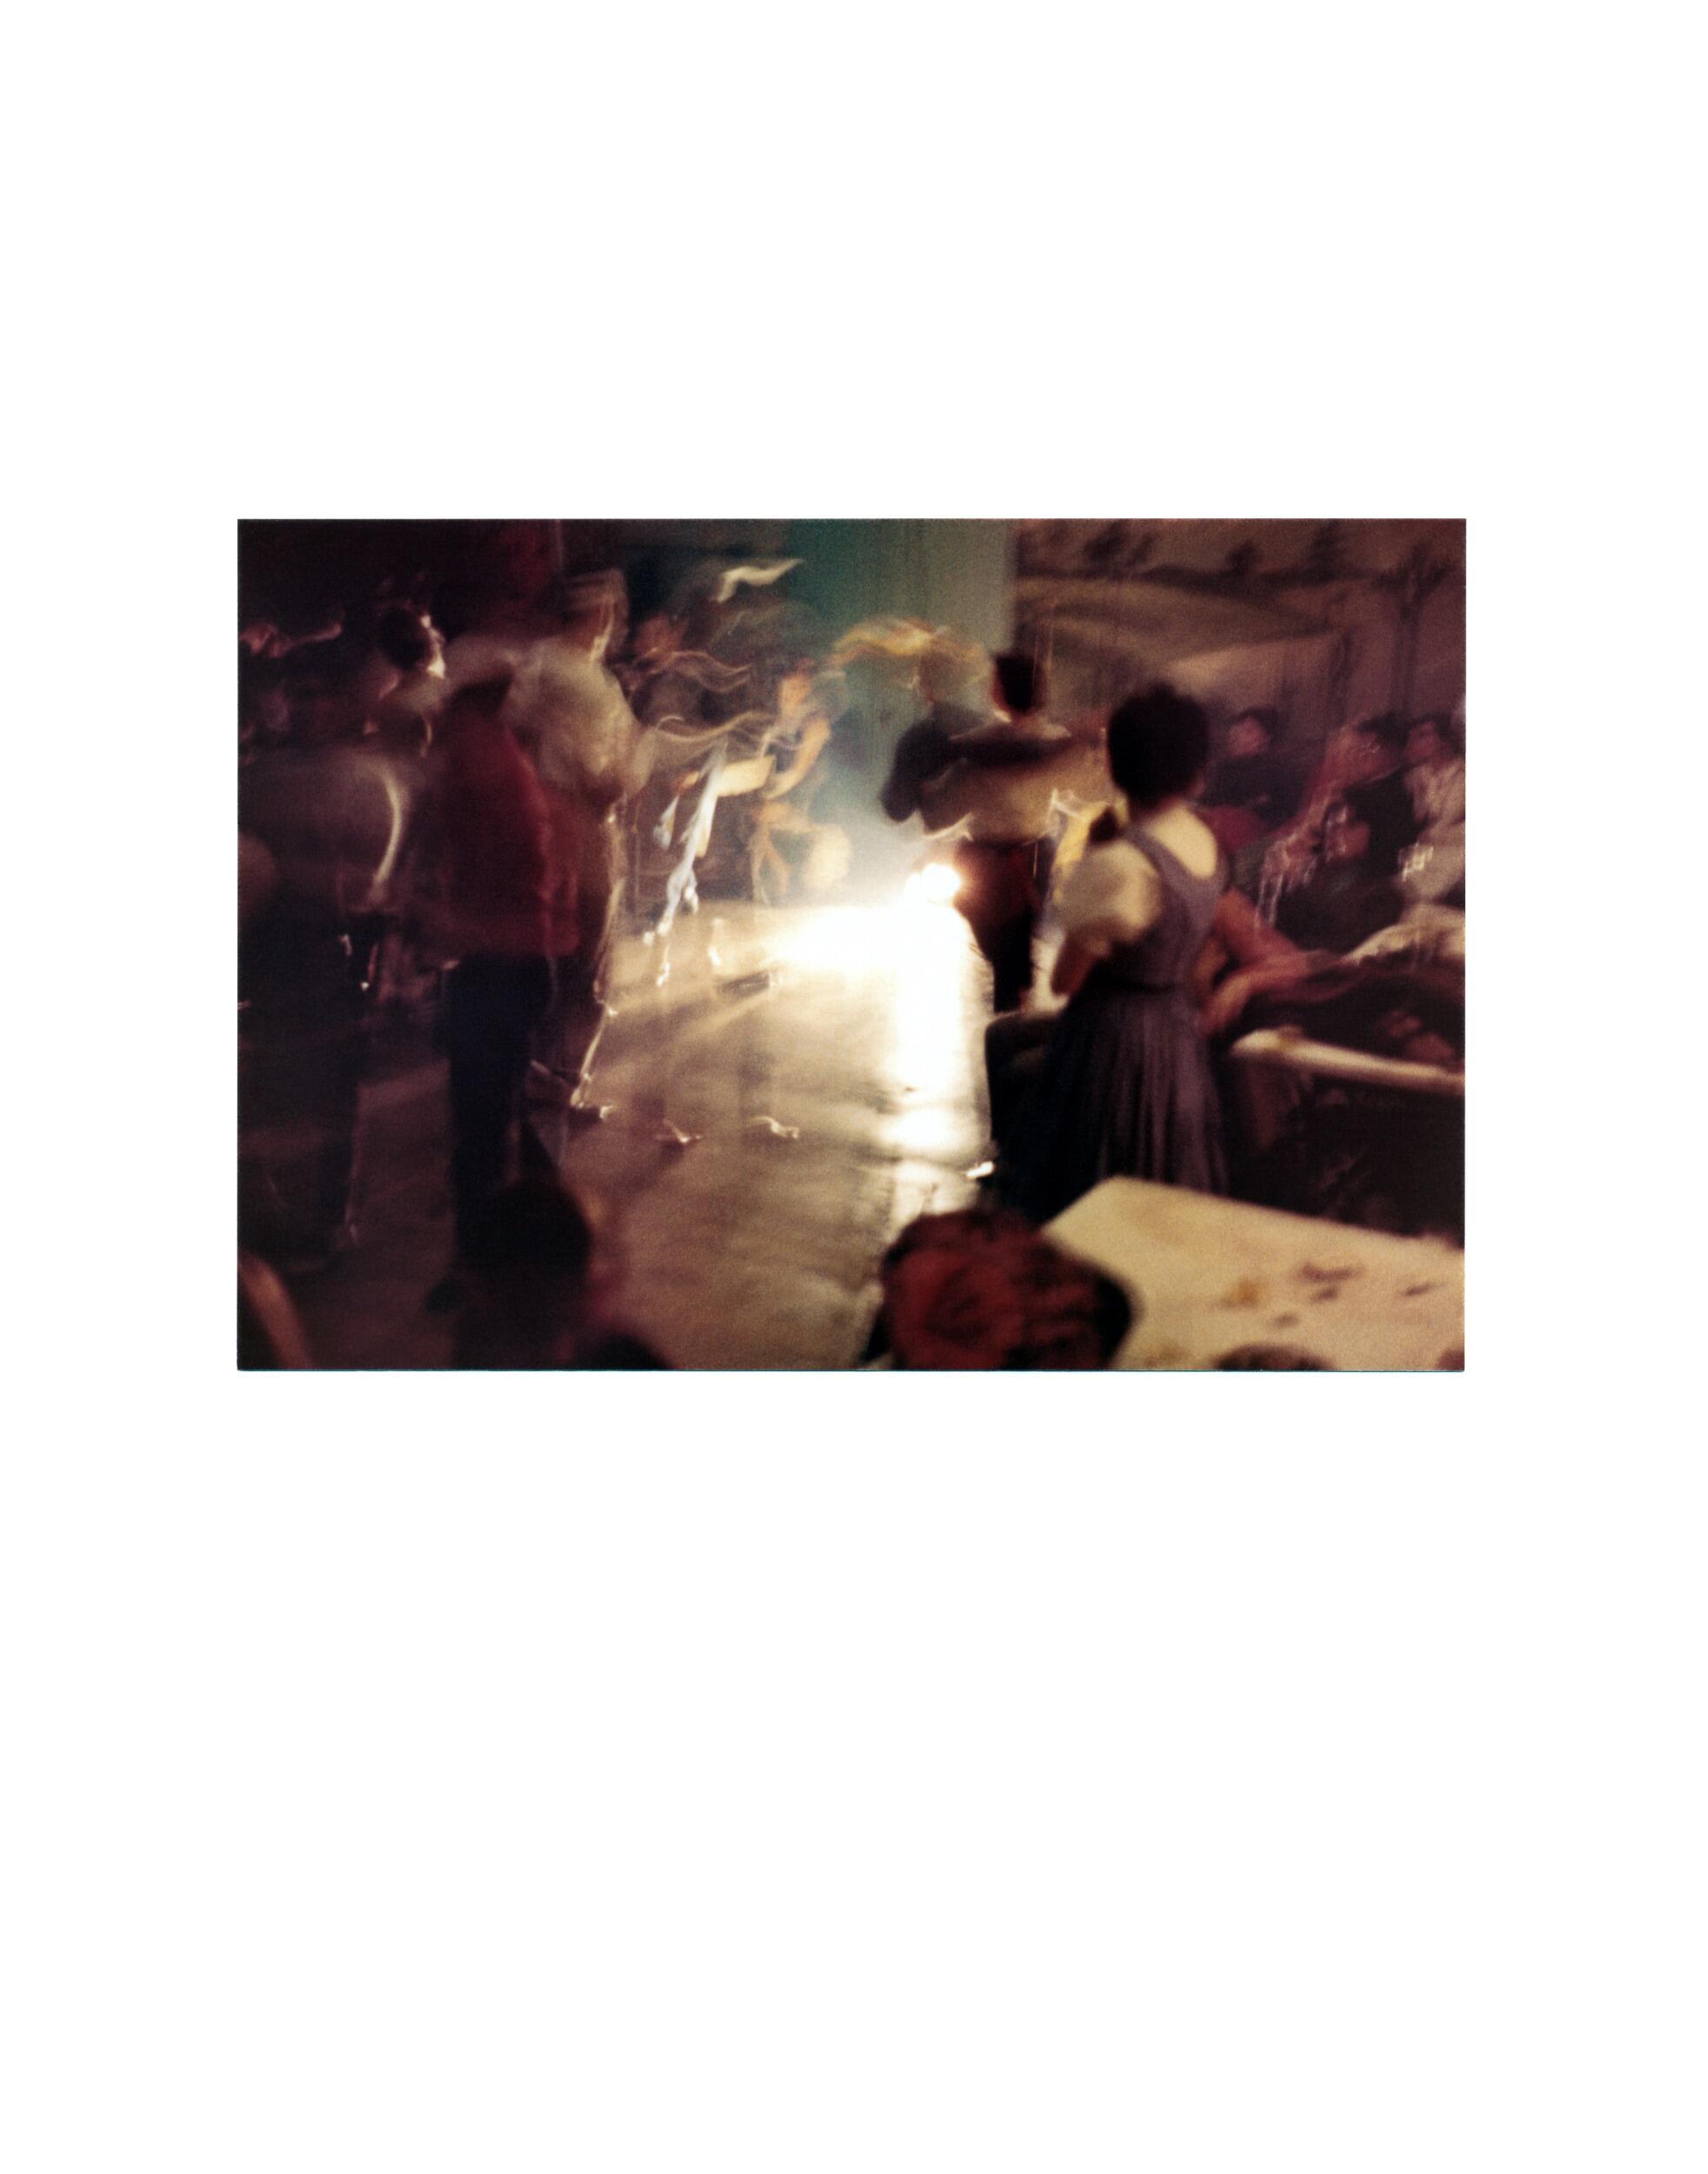 A dark blurry photo of people dancing 